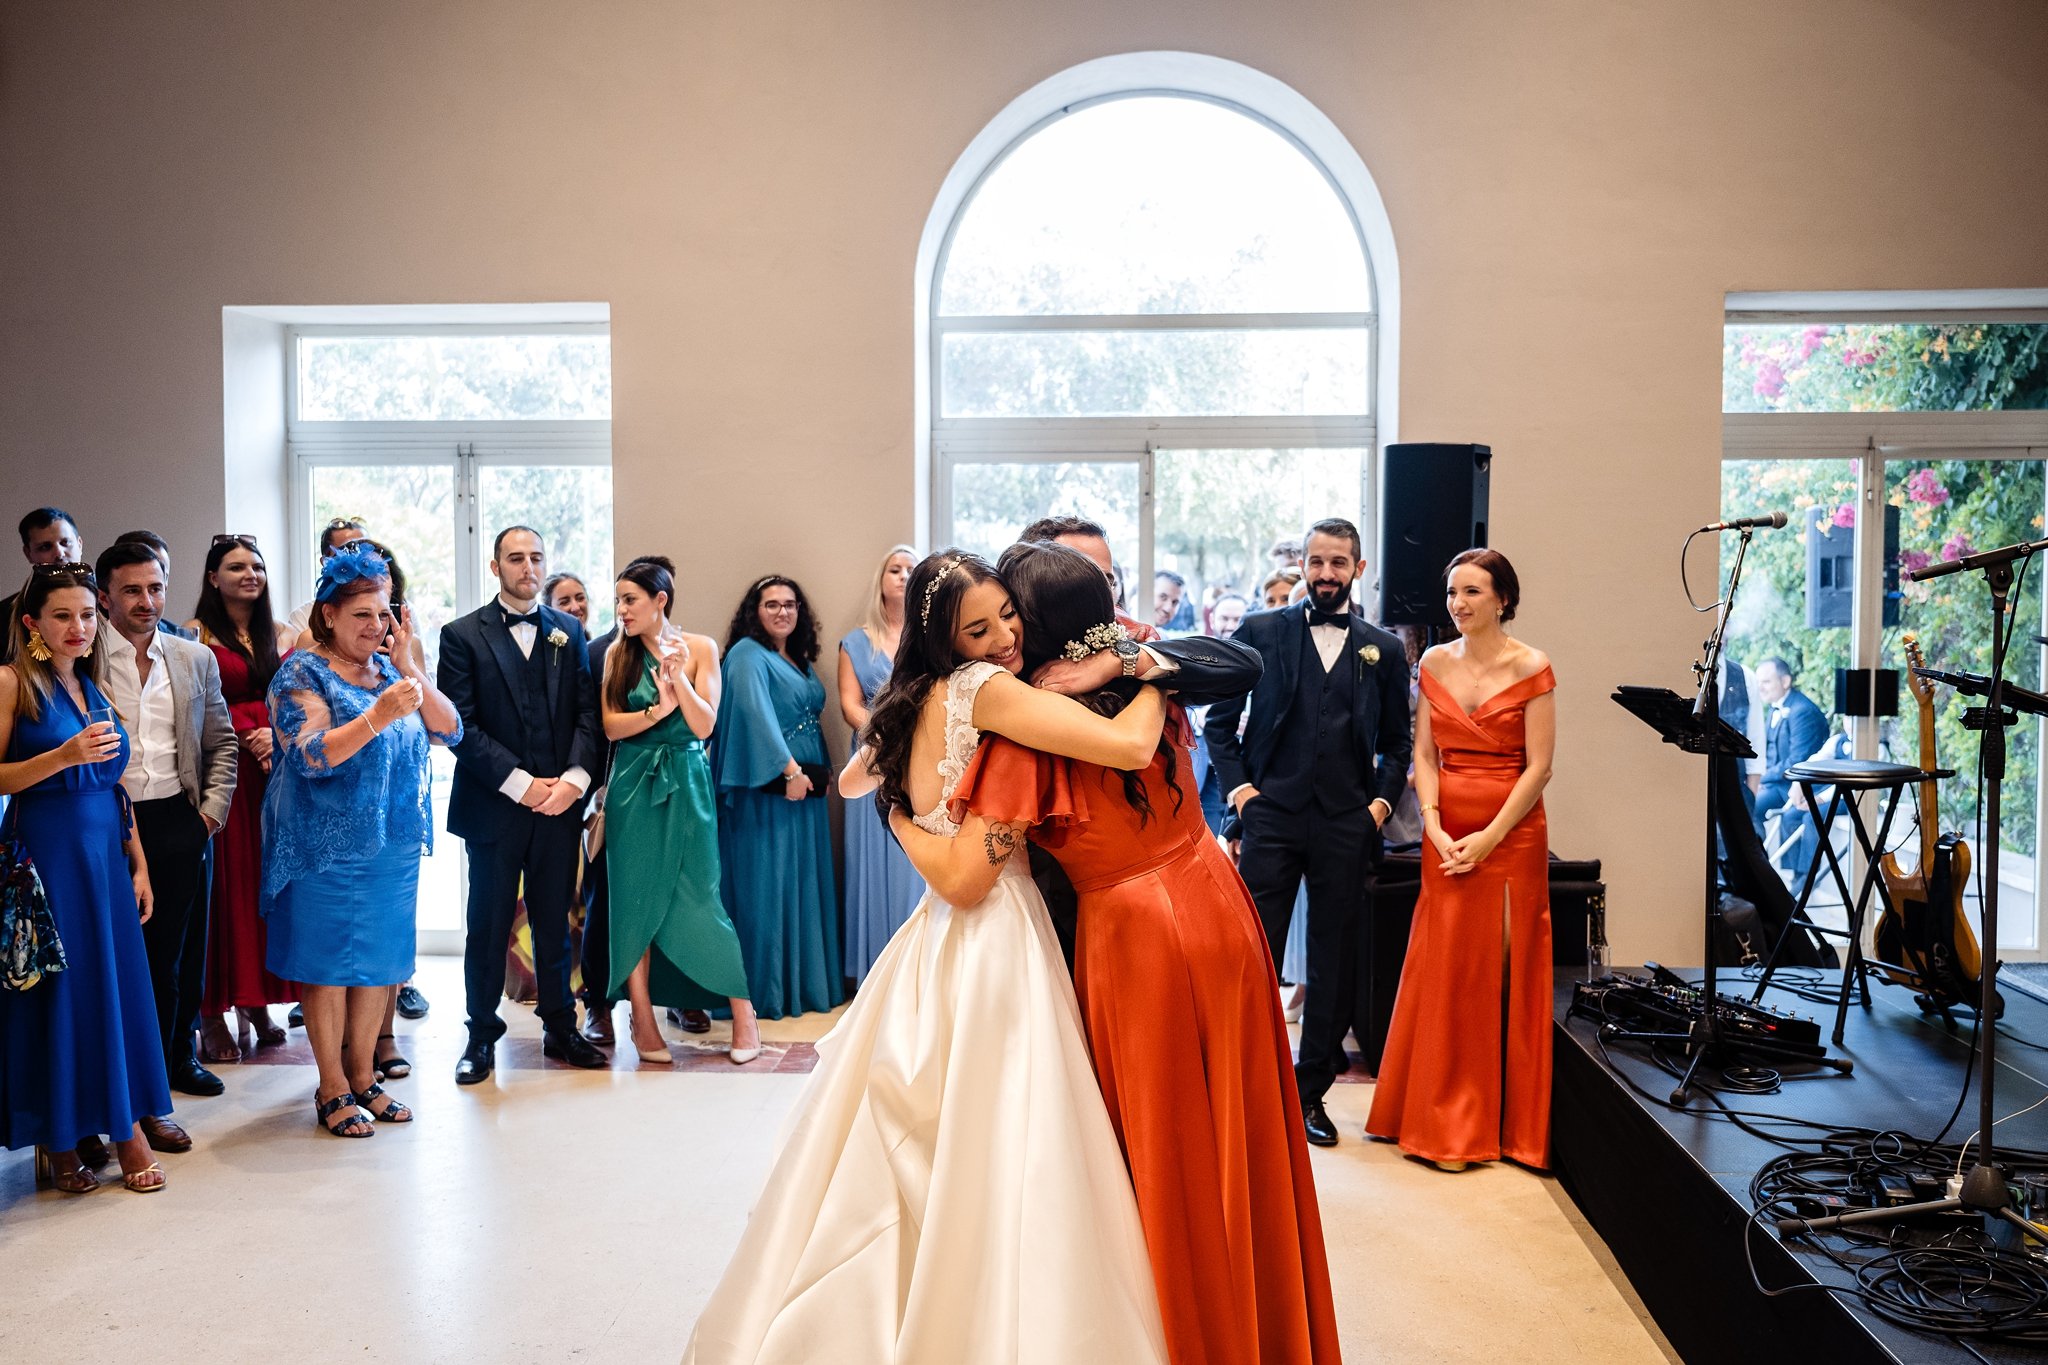 Desiree and Andrei's Wedding at Villa Mdina Naxxar_0060.jpg